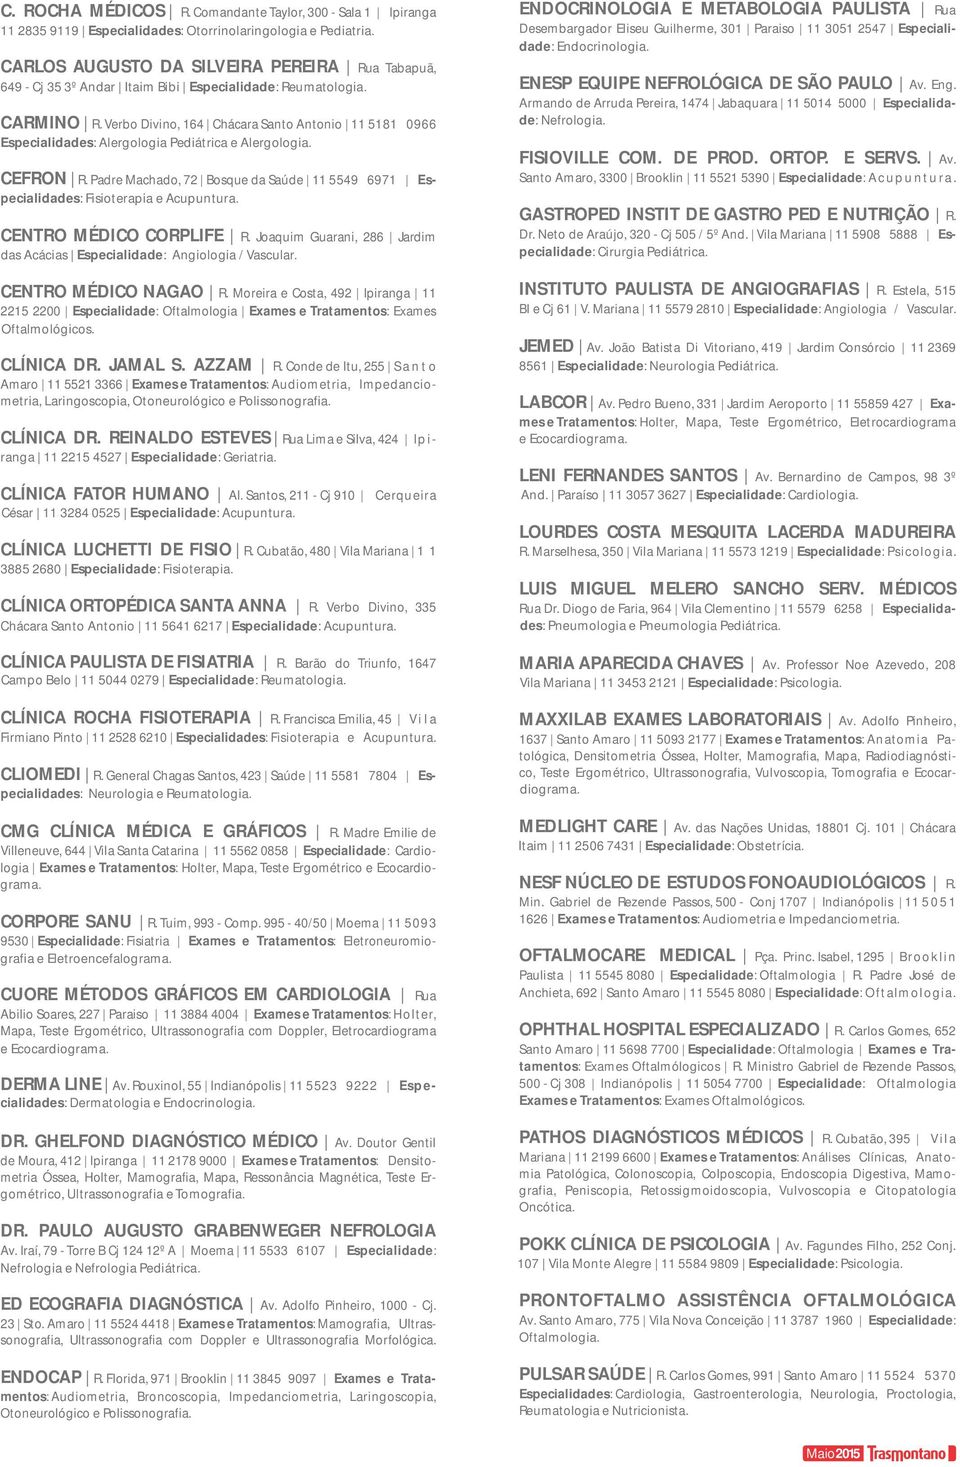 Verbo Divino, 164 Chácara Santo Antonio 11 5181 0966 Especialidades: Alergologia Pediátrica e Alergologia. CEFRON R.